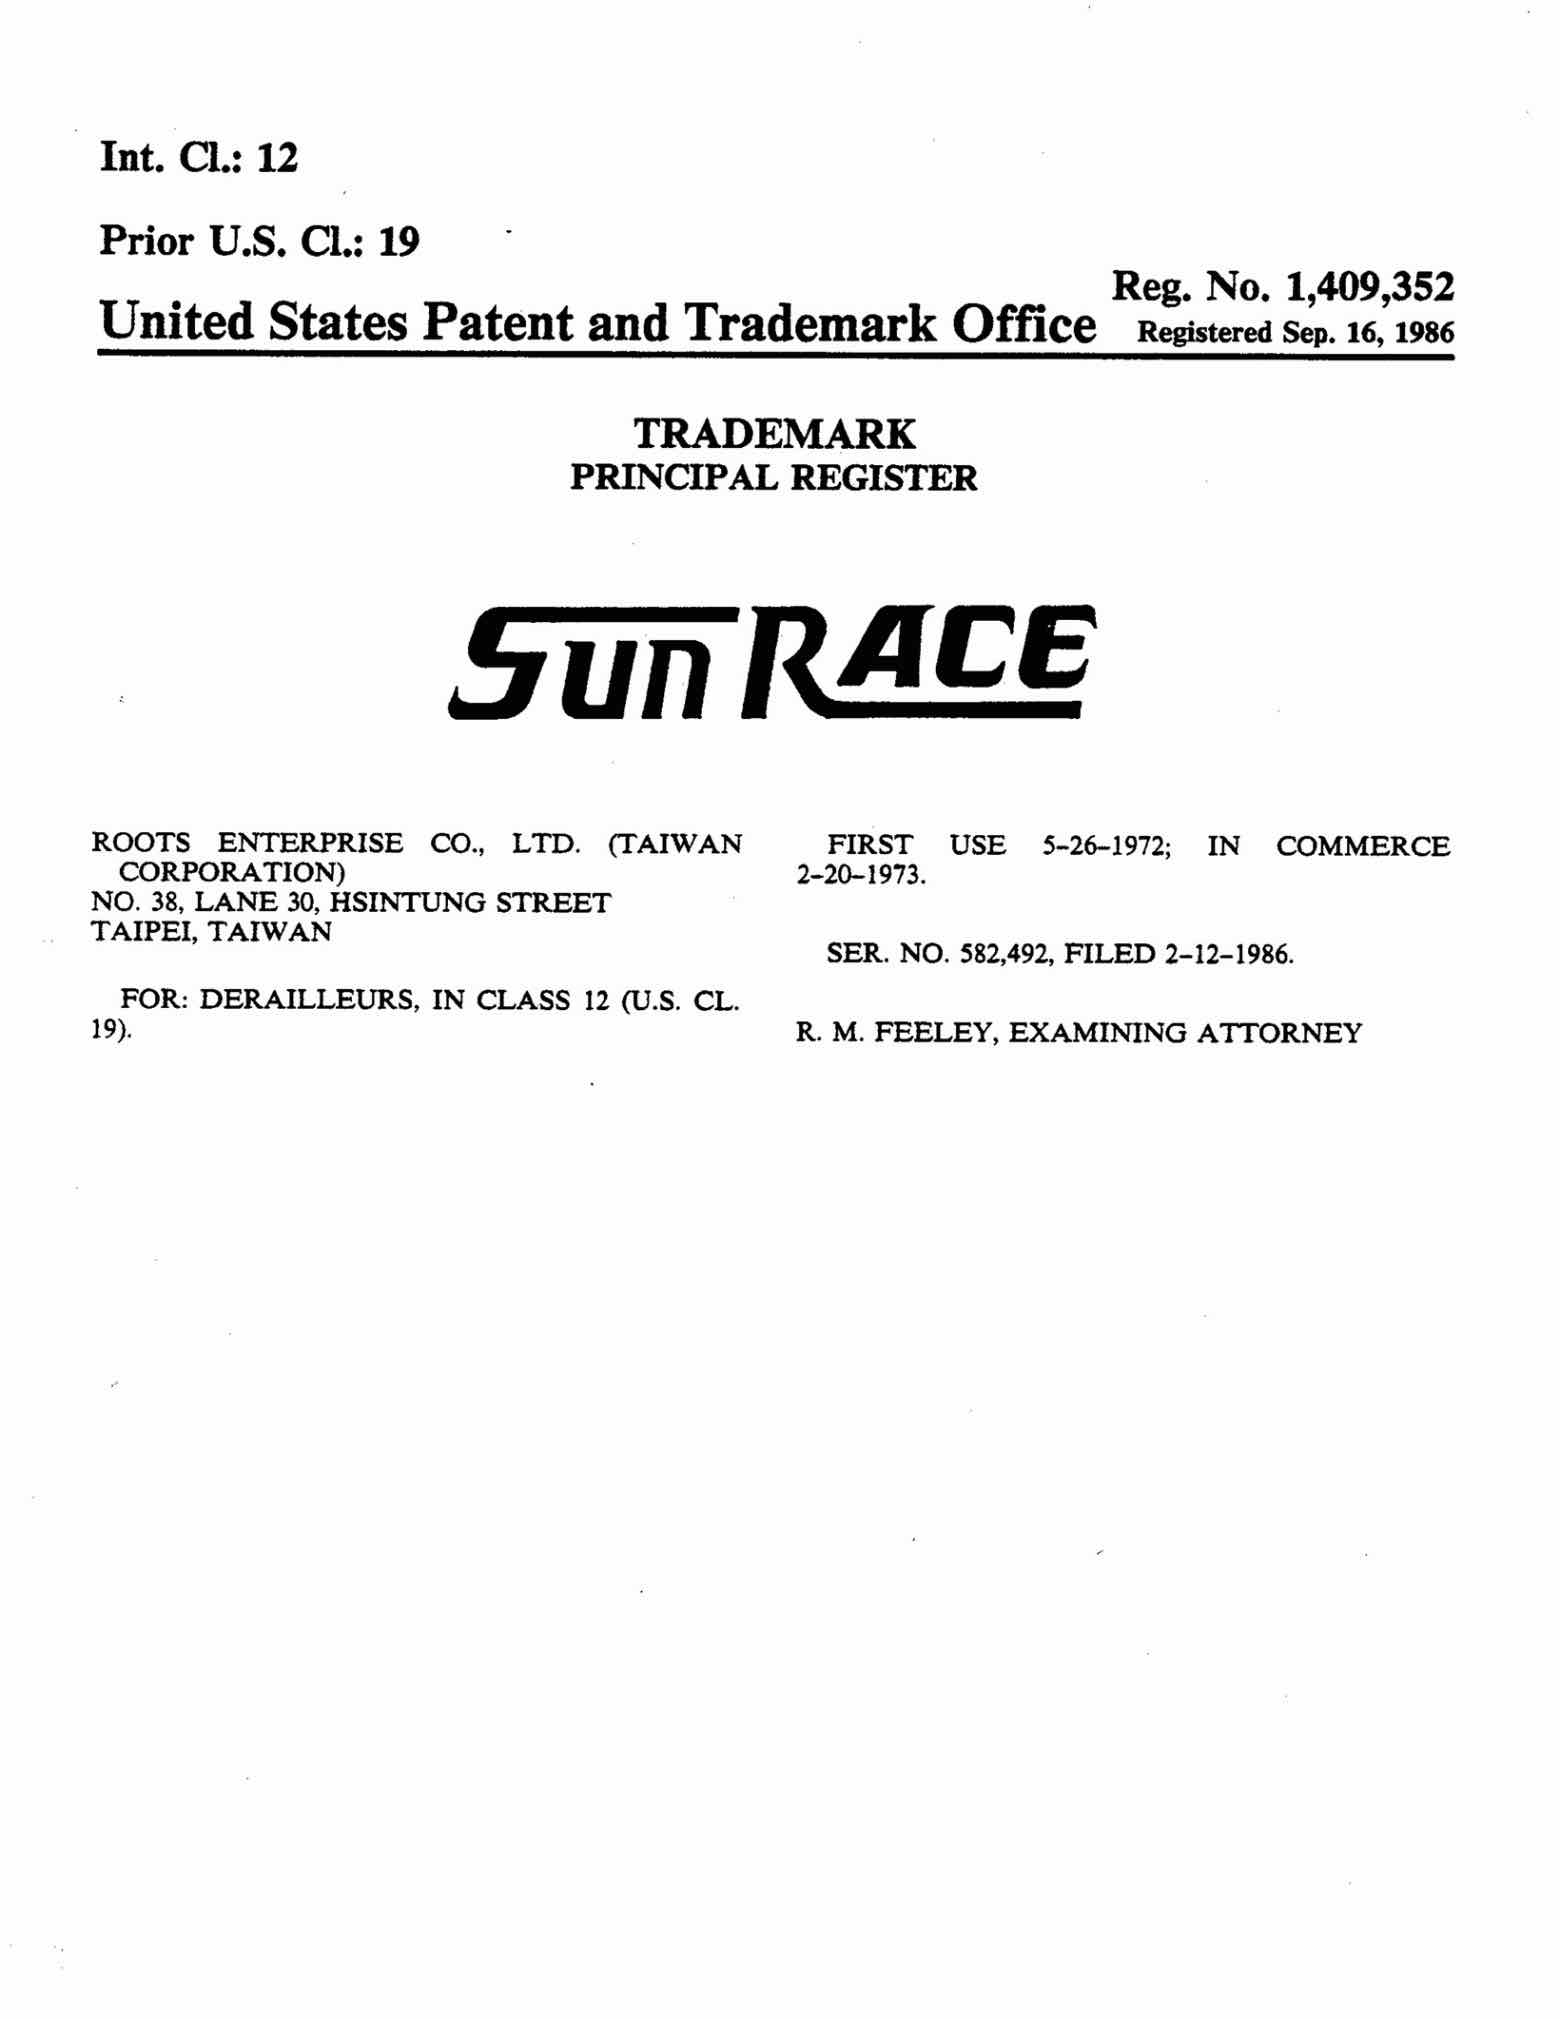 US Trademark 1,409,352 - SunRace main image